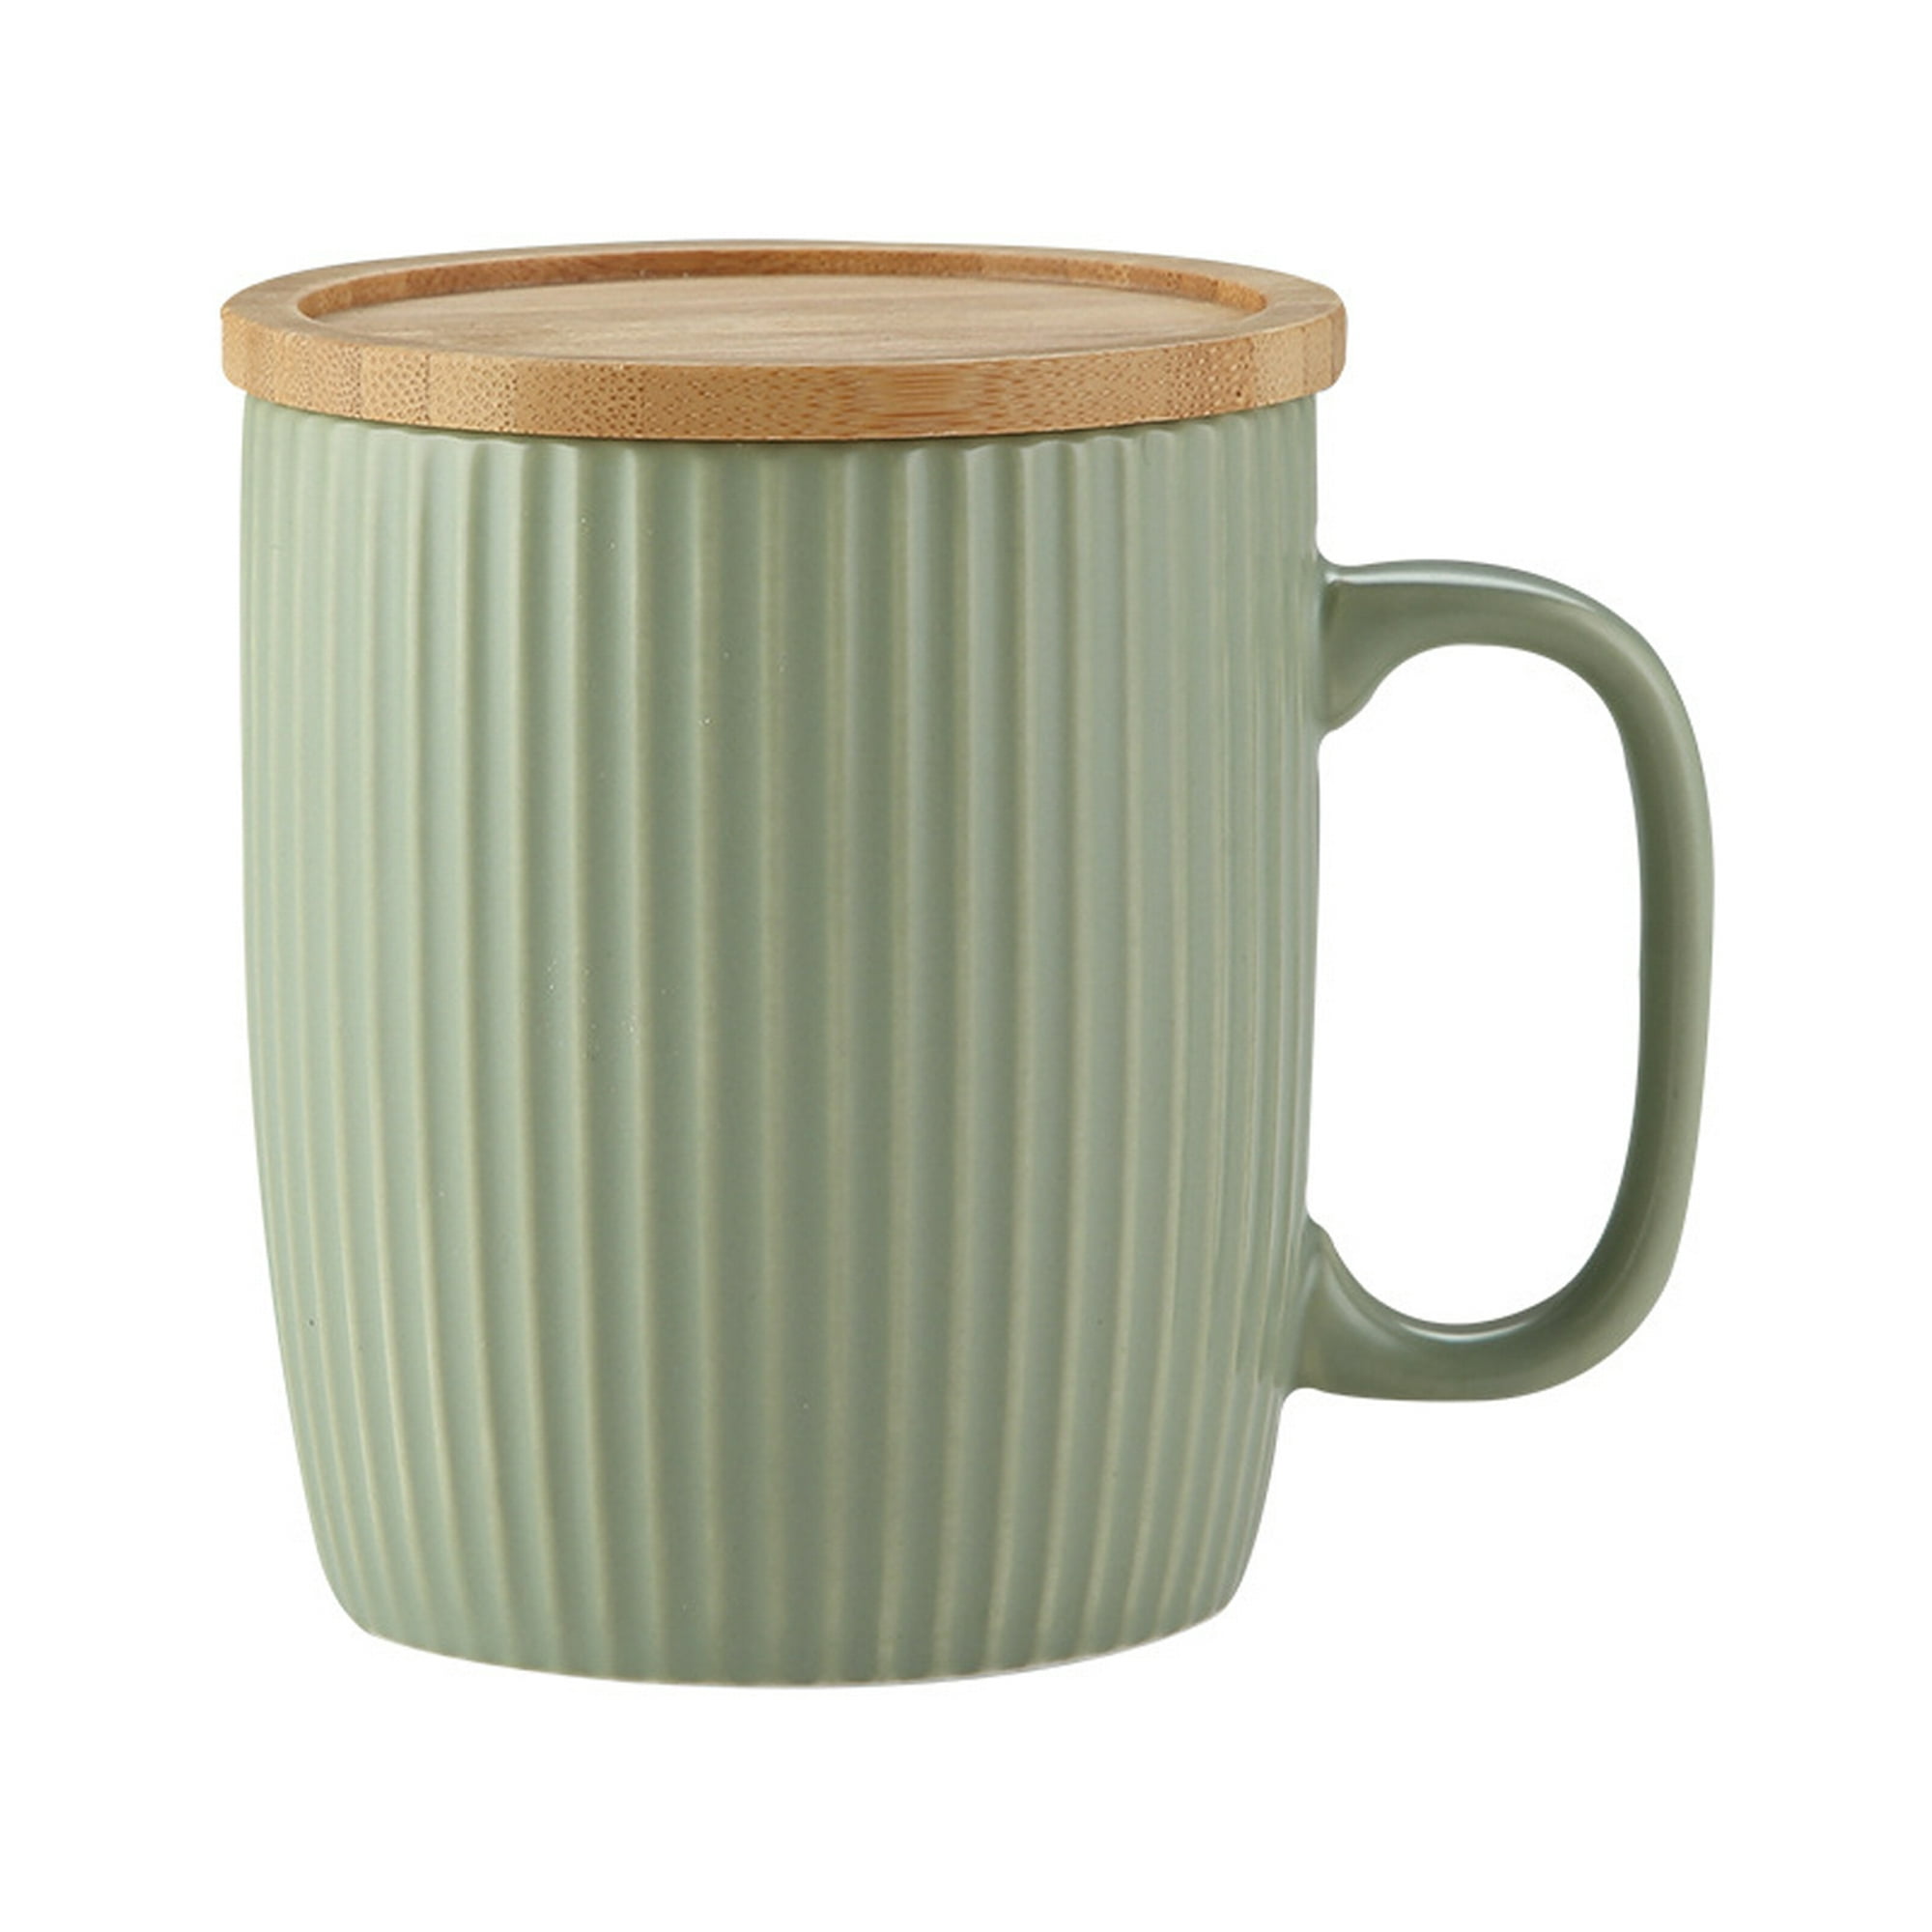 2 tazas de desayuno grandes, cerámica blanca, líneas horizontales verdes,  asa para agarrar, vajilla, tazas de té, regalo para ella -  España